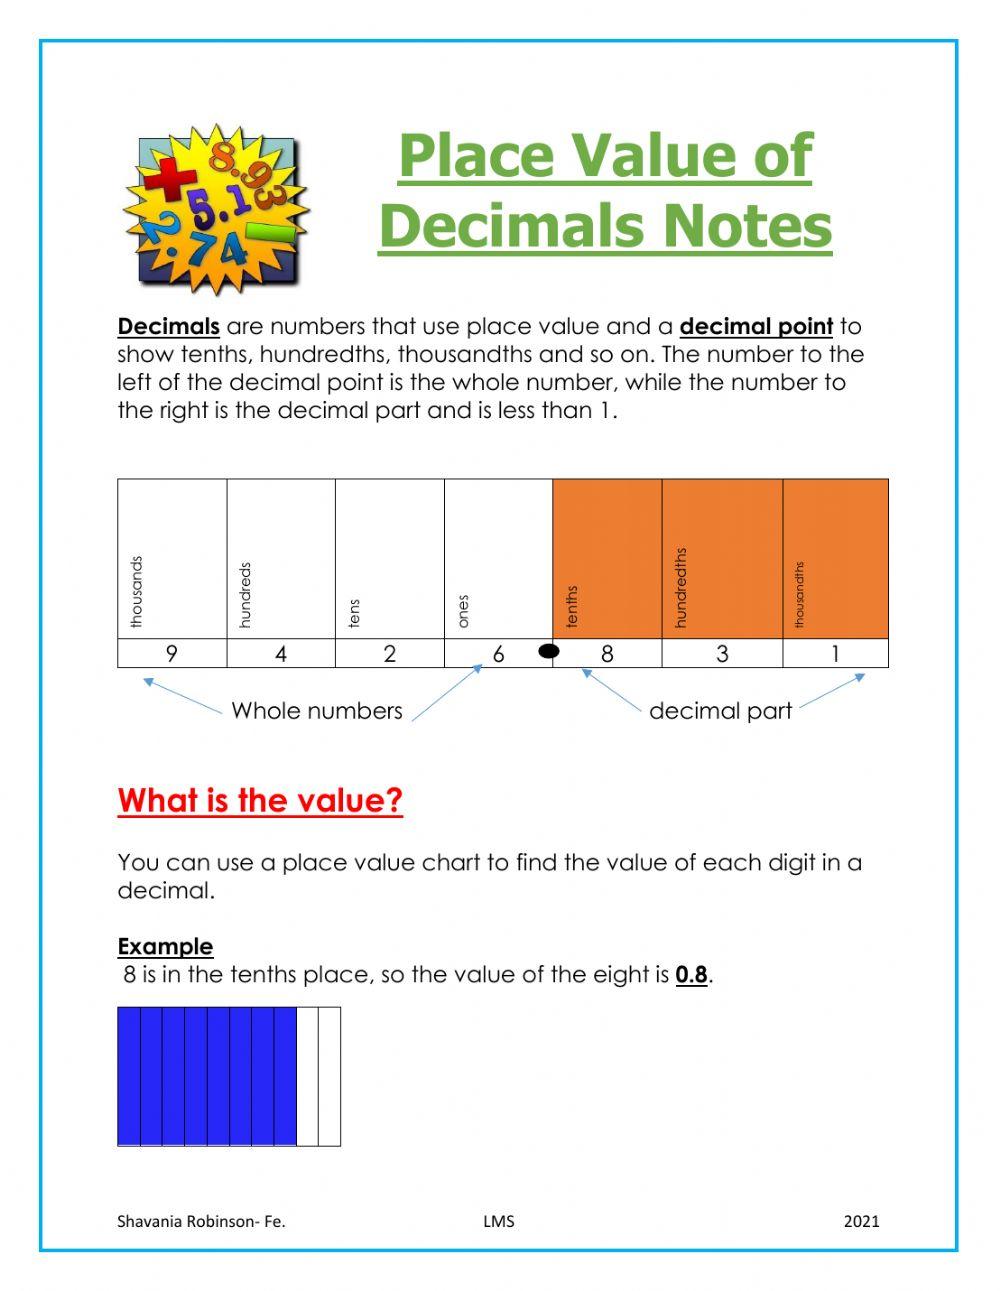 Place Value of Decimals Notes